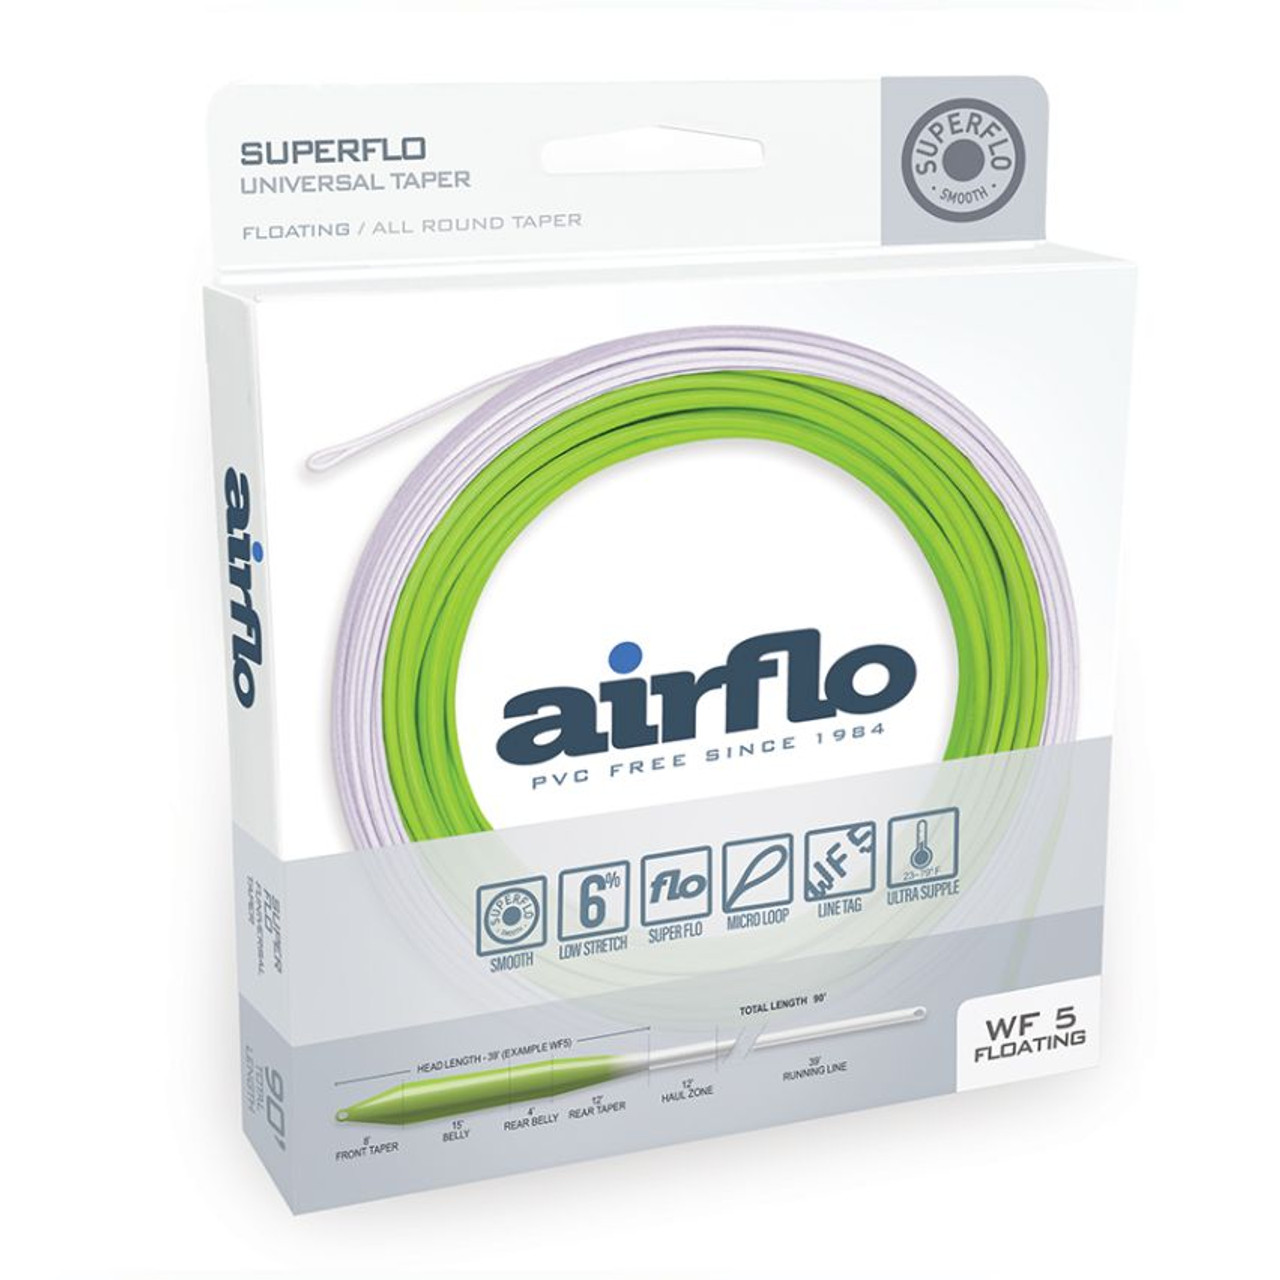 Airflo SuperFlo Universal Taper Fly Line